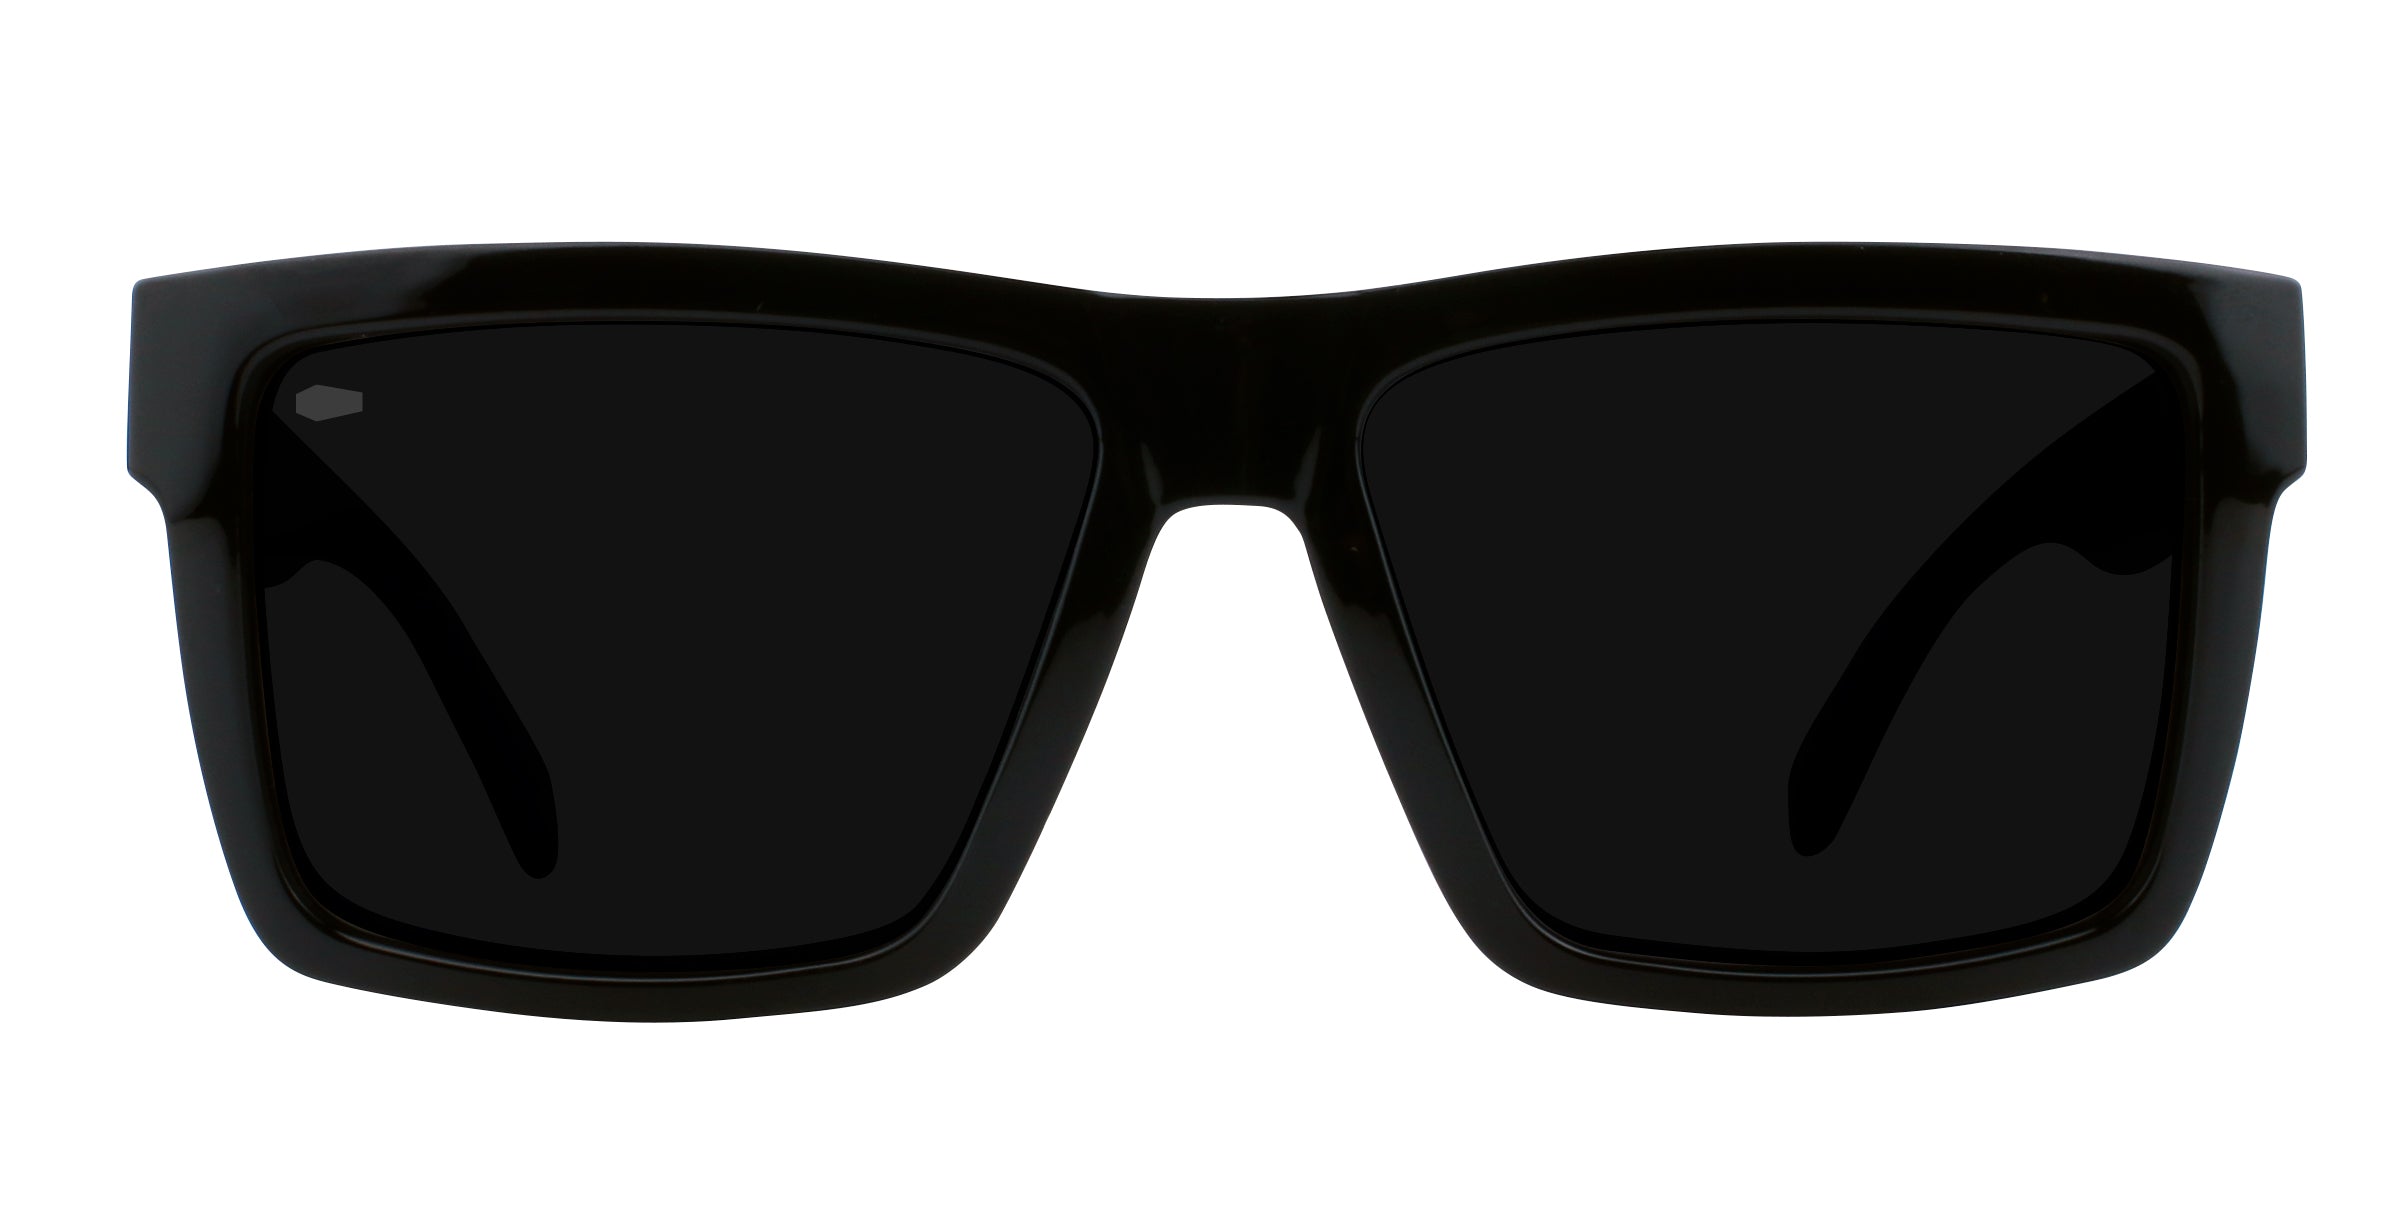 Maui Jim Mangroves Review – Men's Wrap Sunglasses | SportRx - YouTube